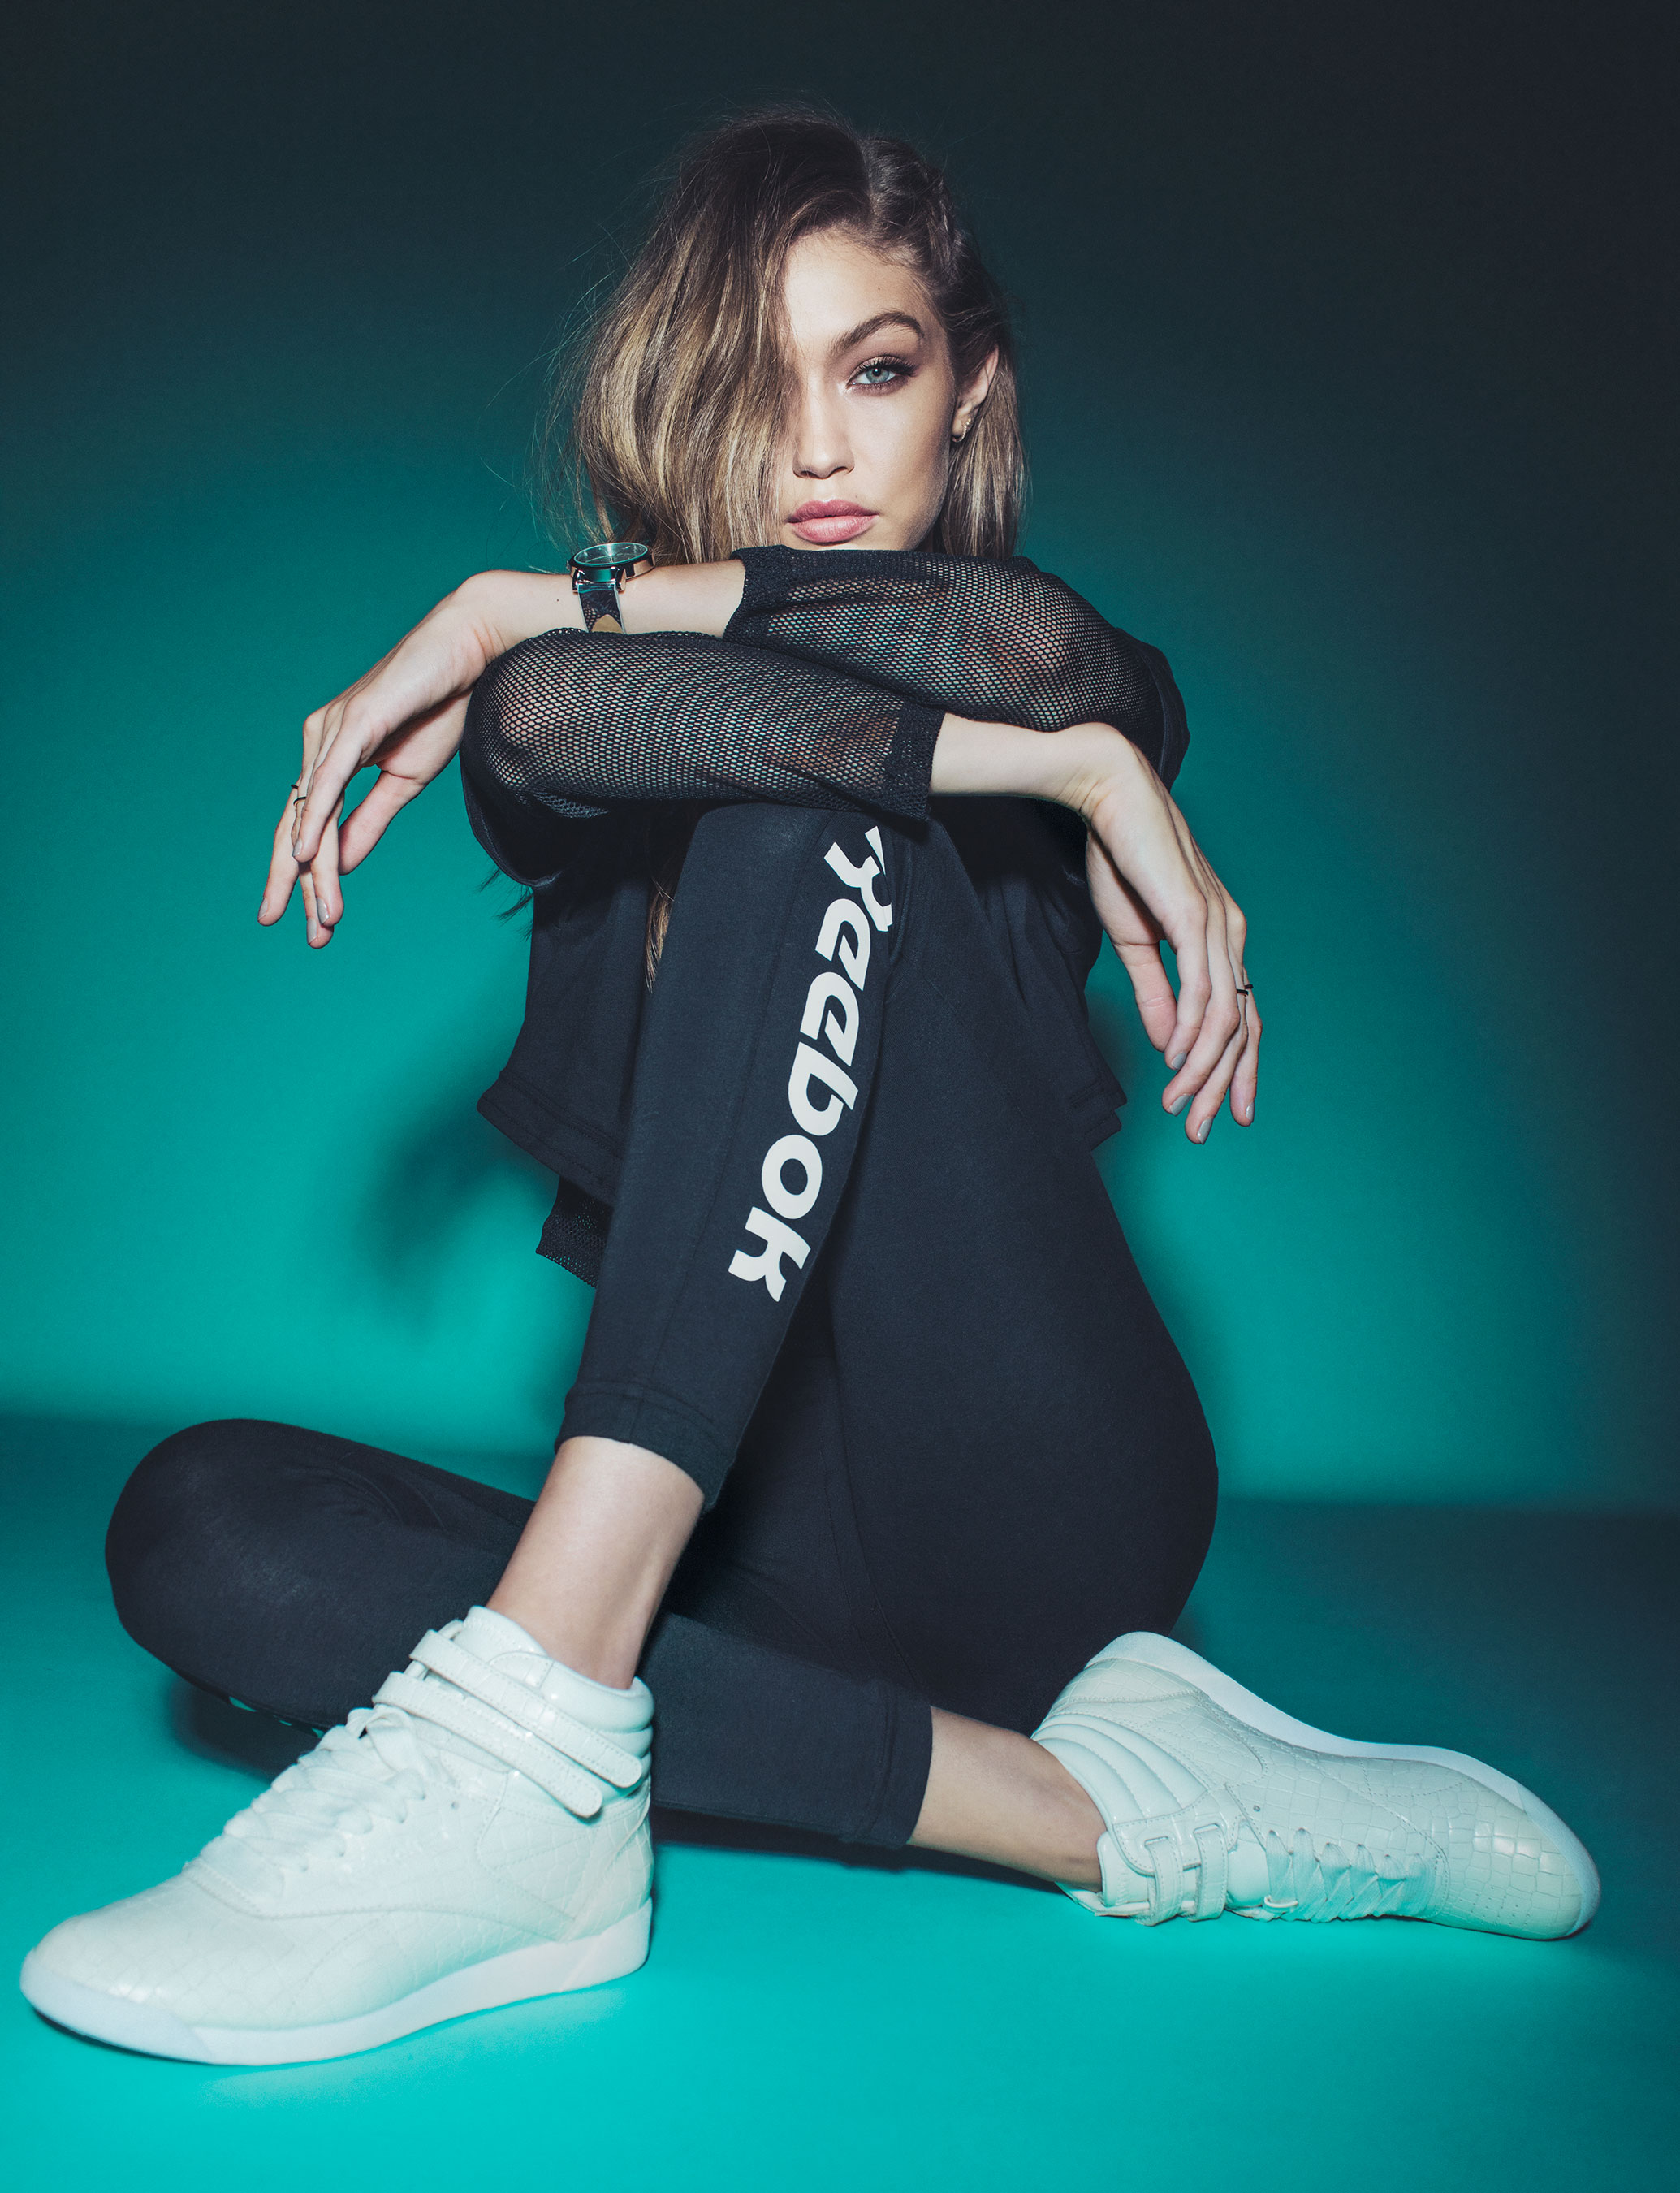 Gigi Hadid Stars in Freestyle Hi Crackle Sneaker Campaign